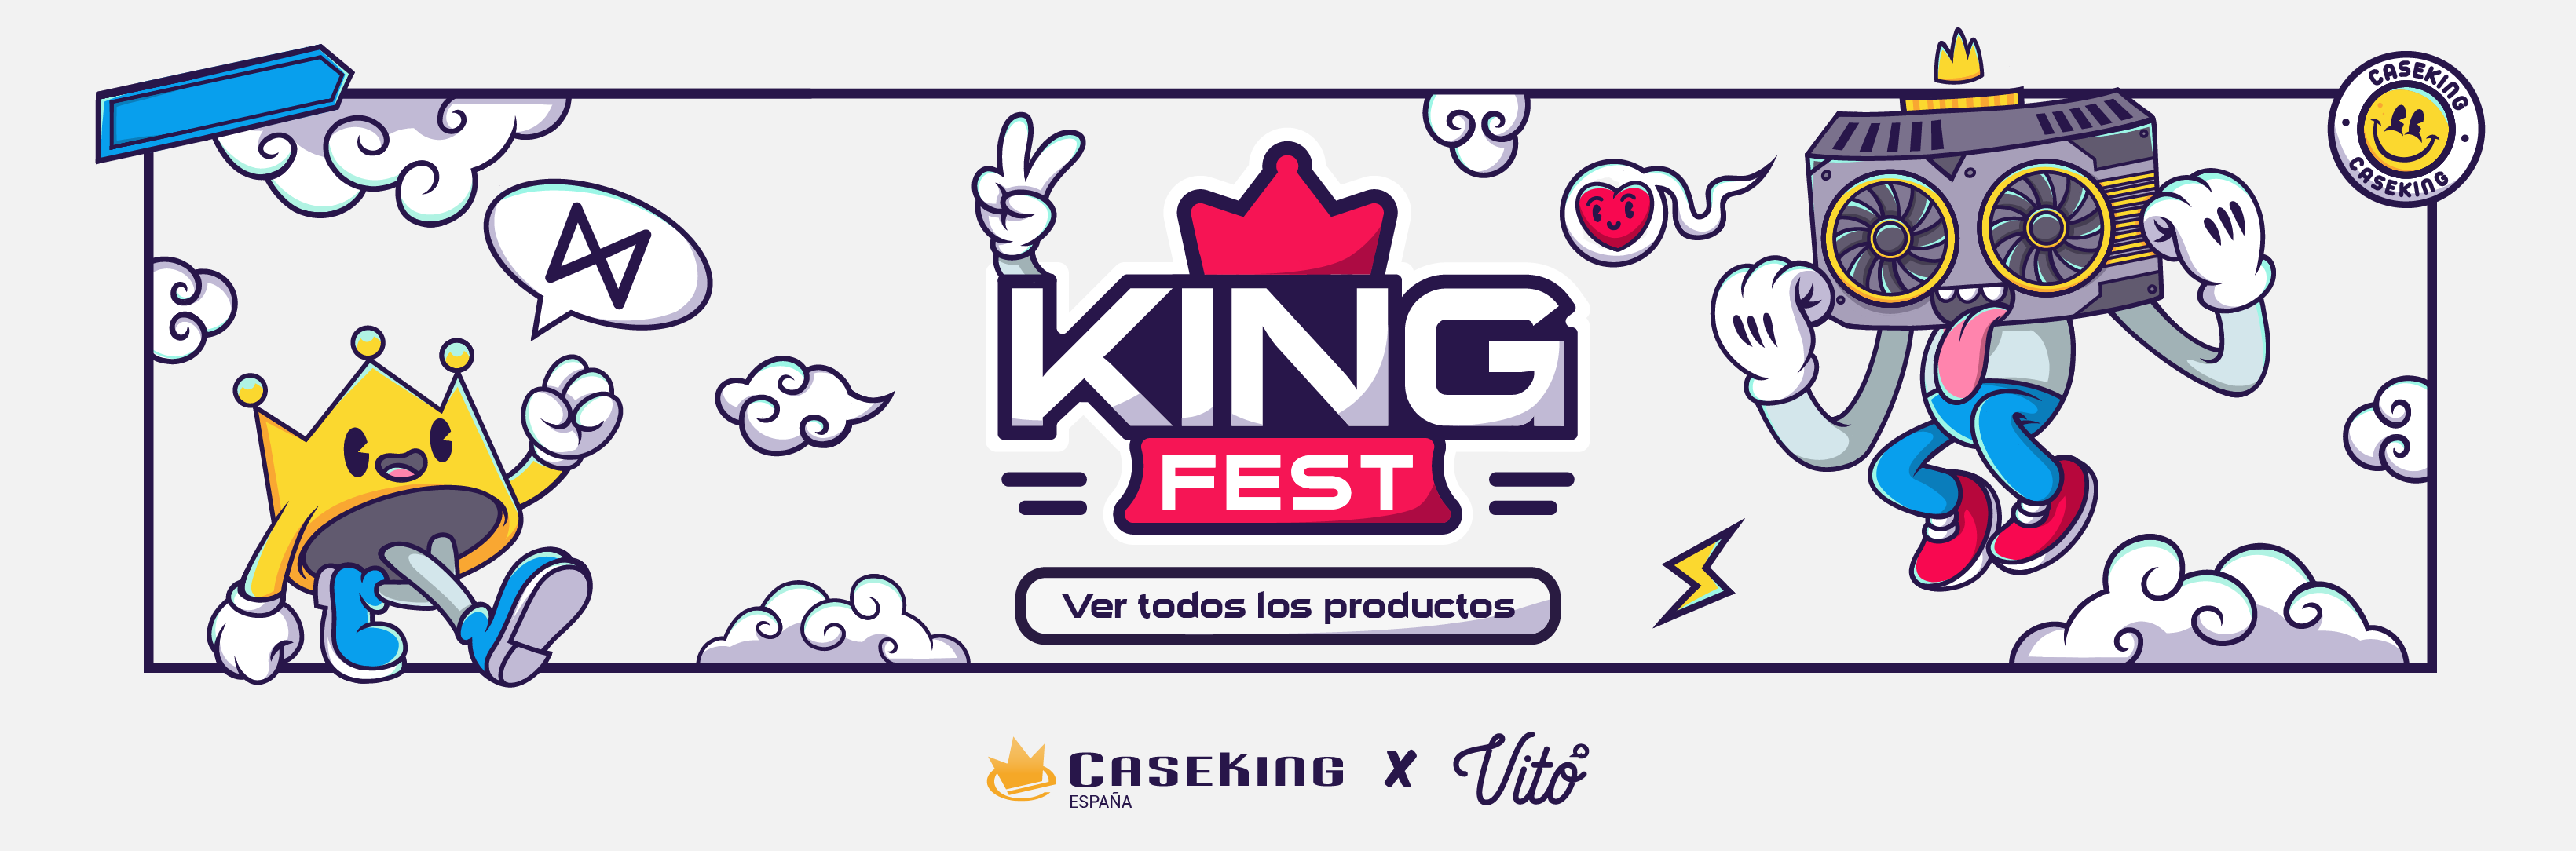 Campaña King Fest